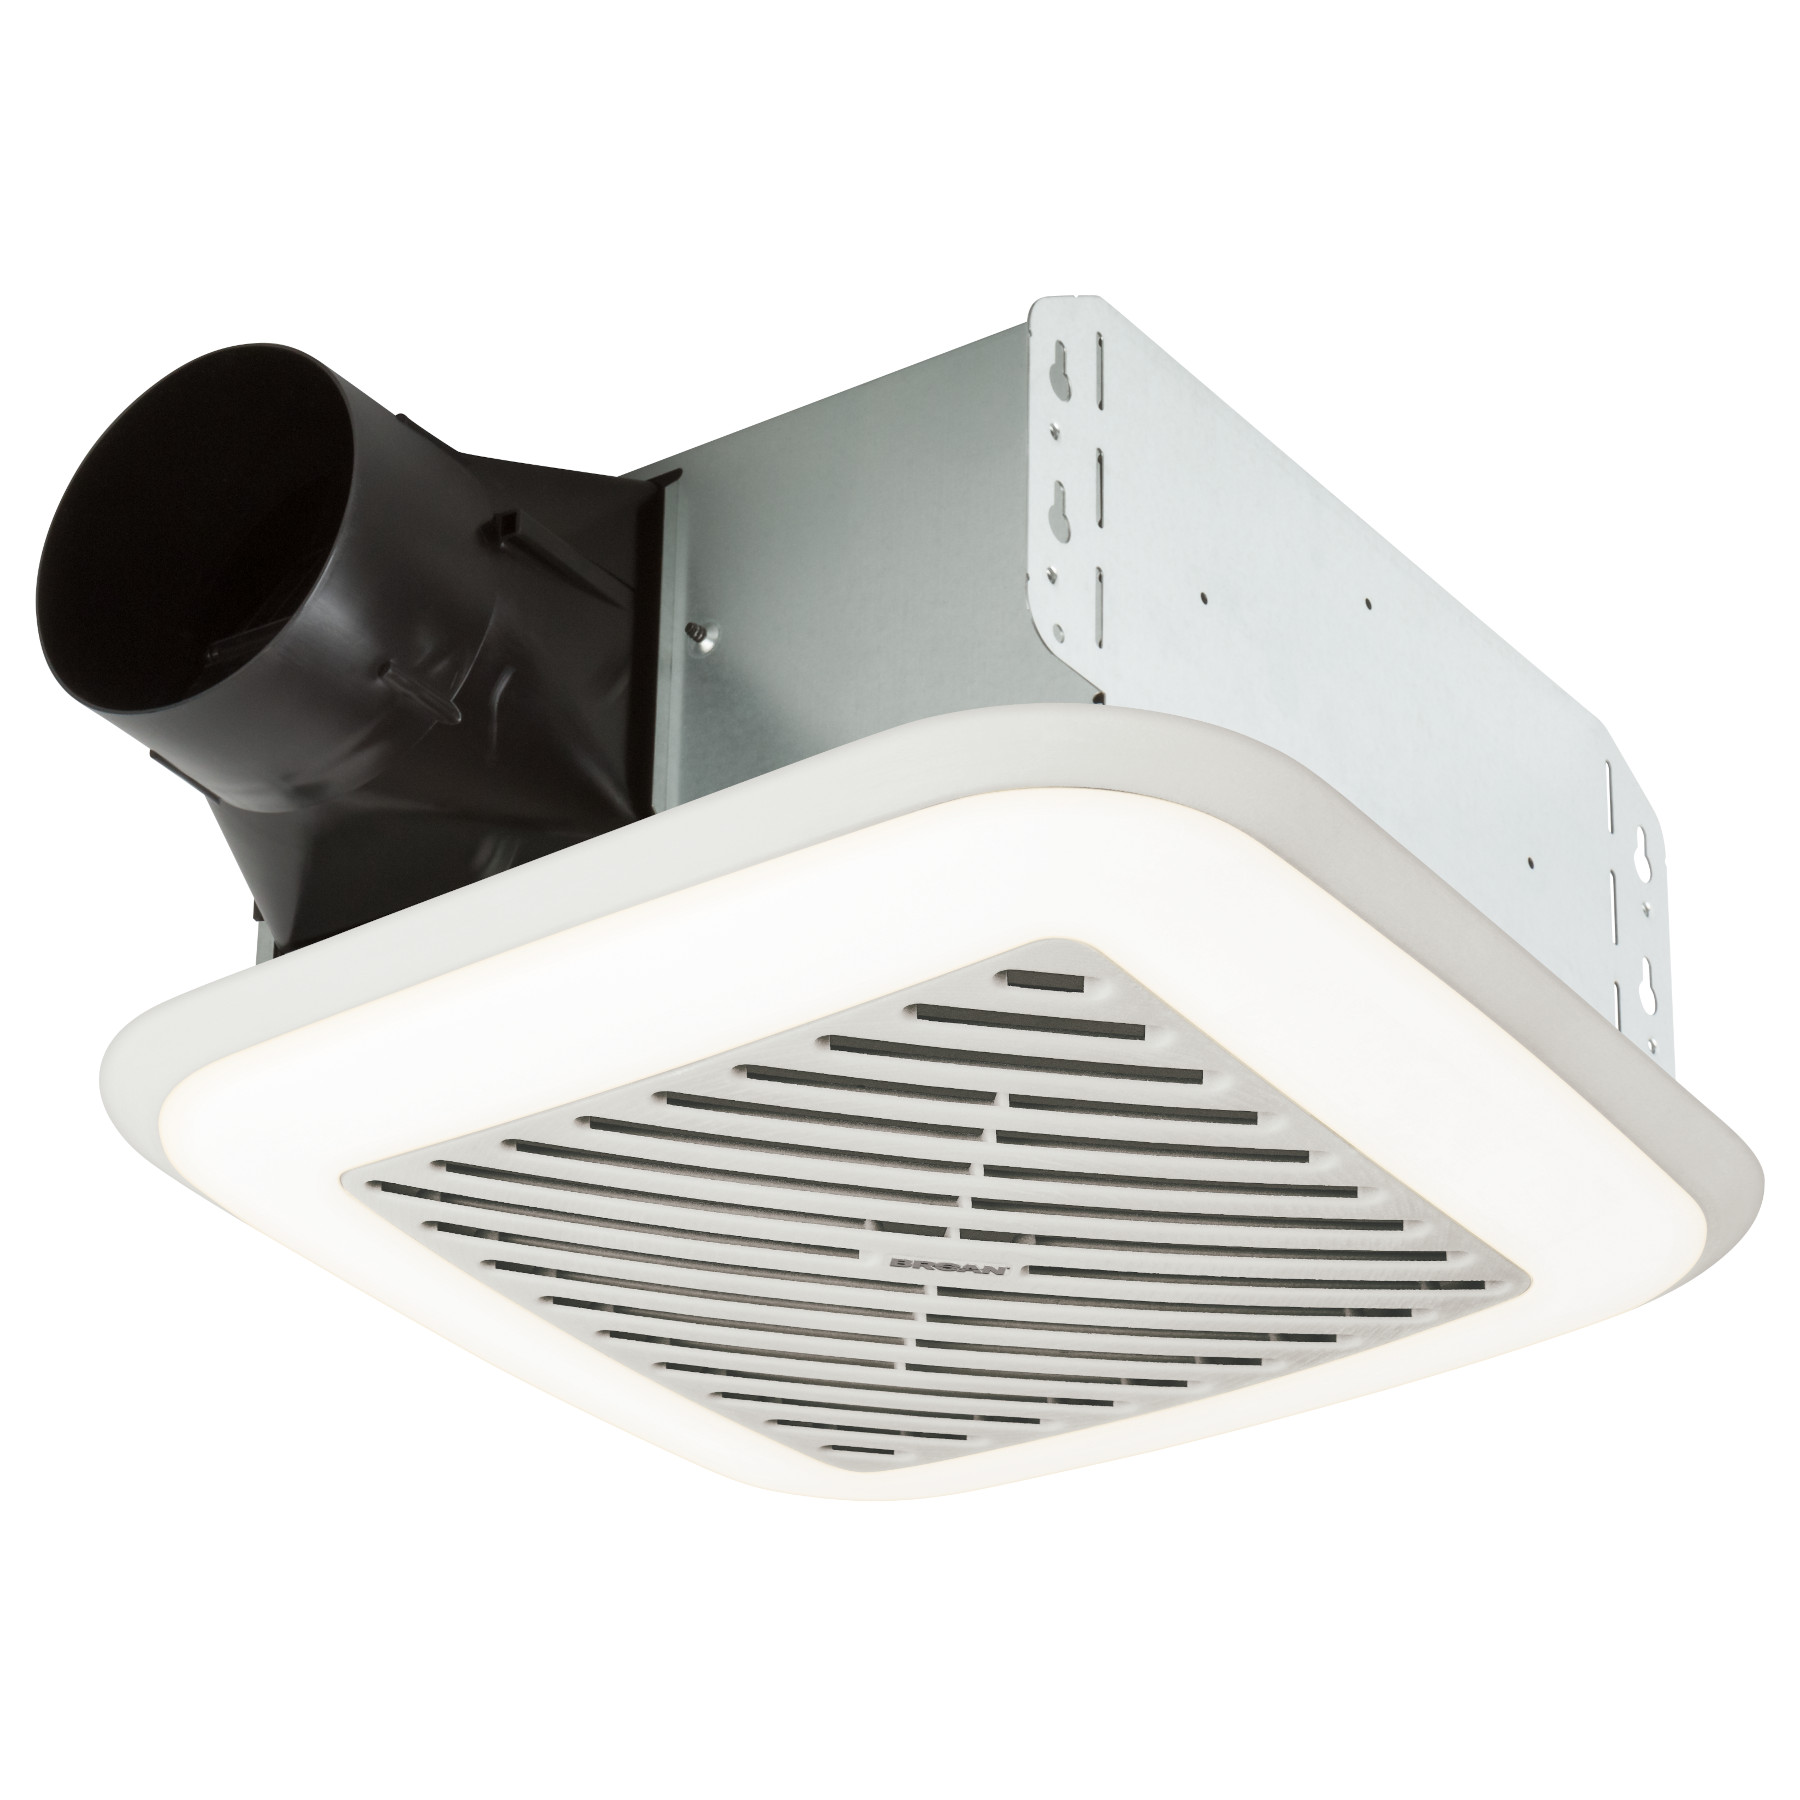 Broan® Flex Series 110 CFM Ventilation Fan with Soft Surround LED Lighting Technology, 1.5 Sones, ENERGY STAR® certified